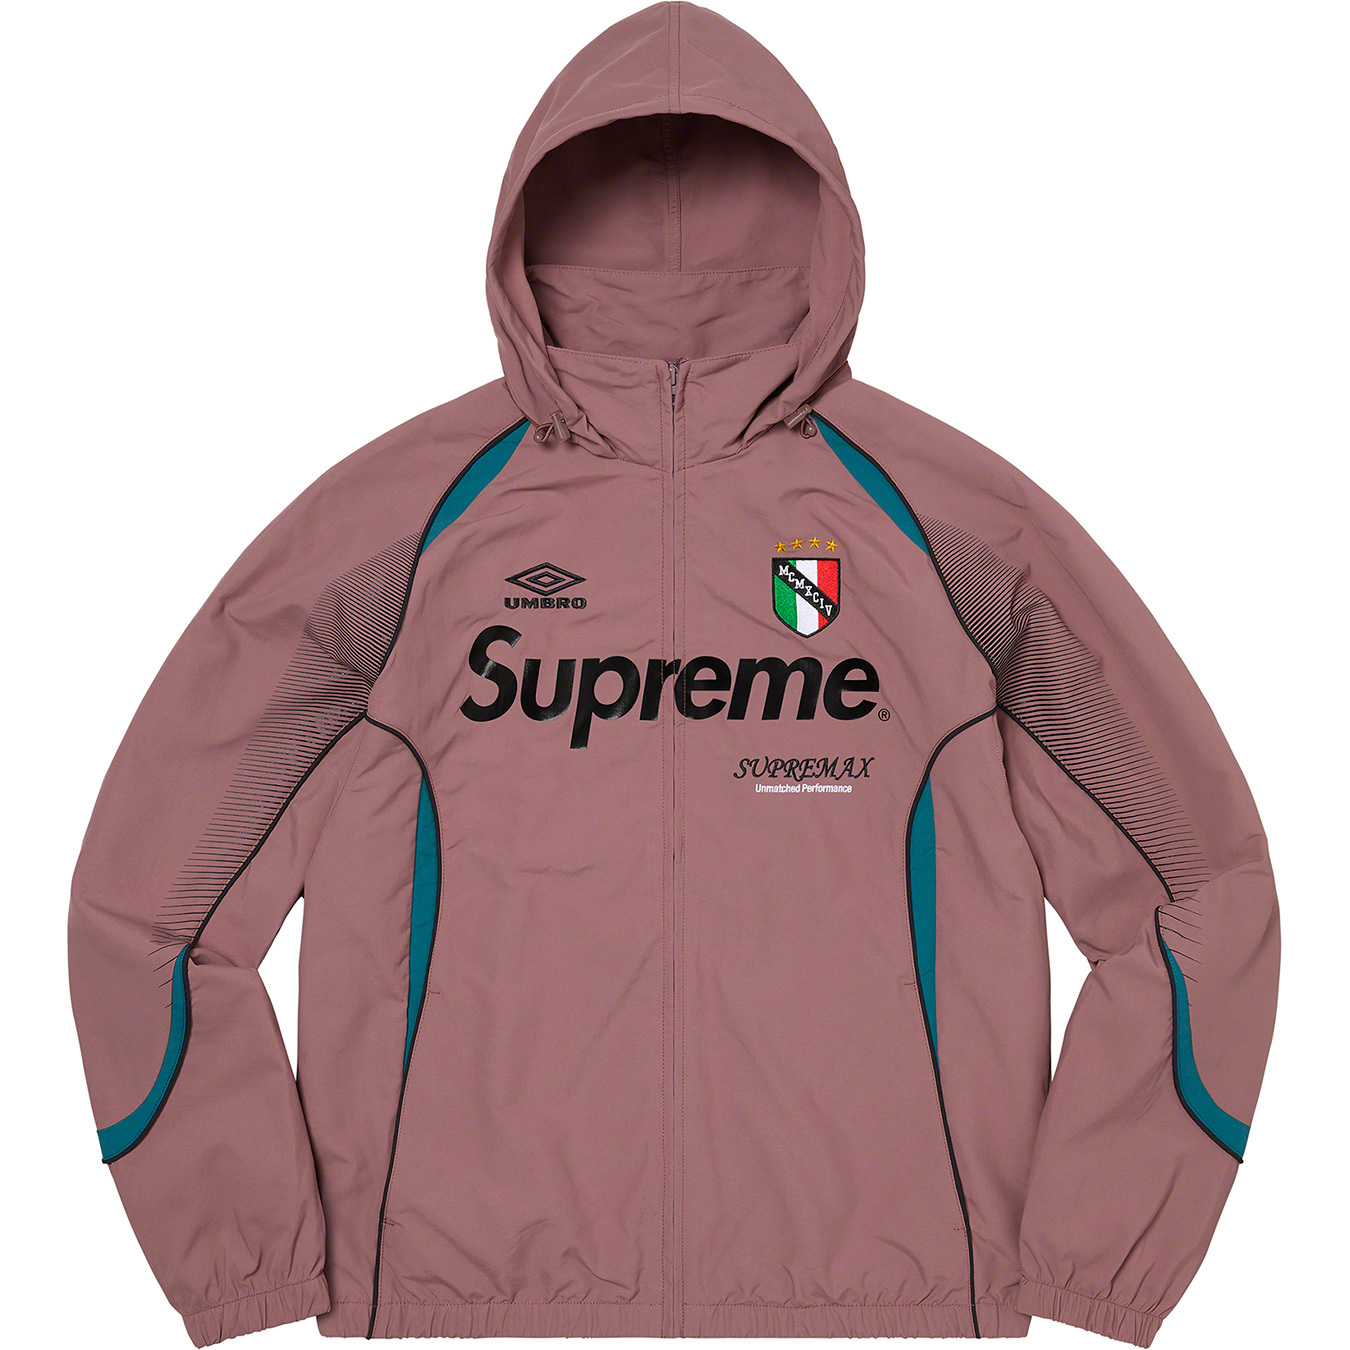 Supreme®/Umbro Track Jacket Lサイズ www.winstudio.com.sg